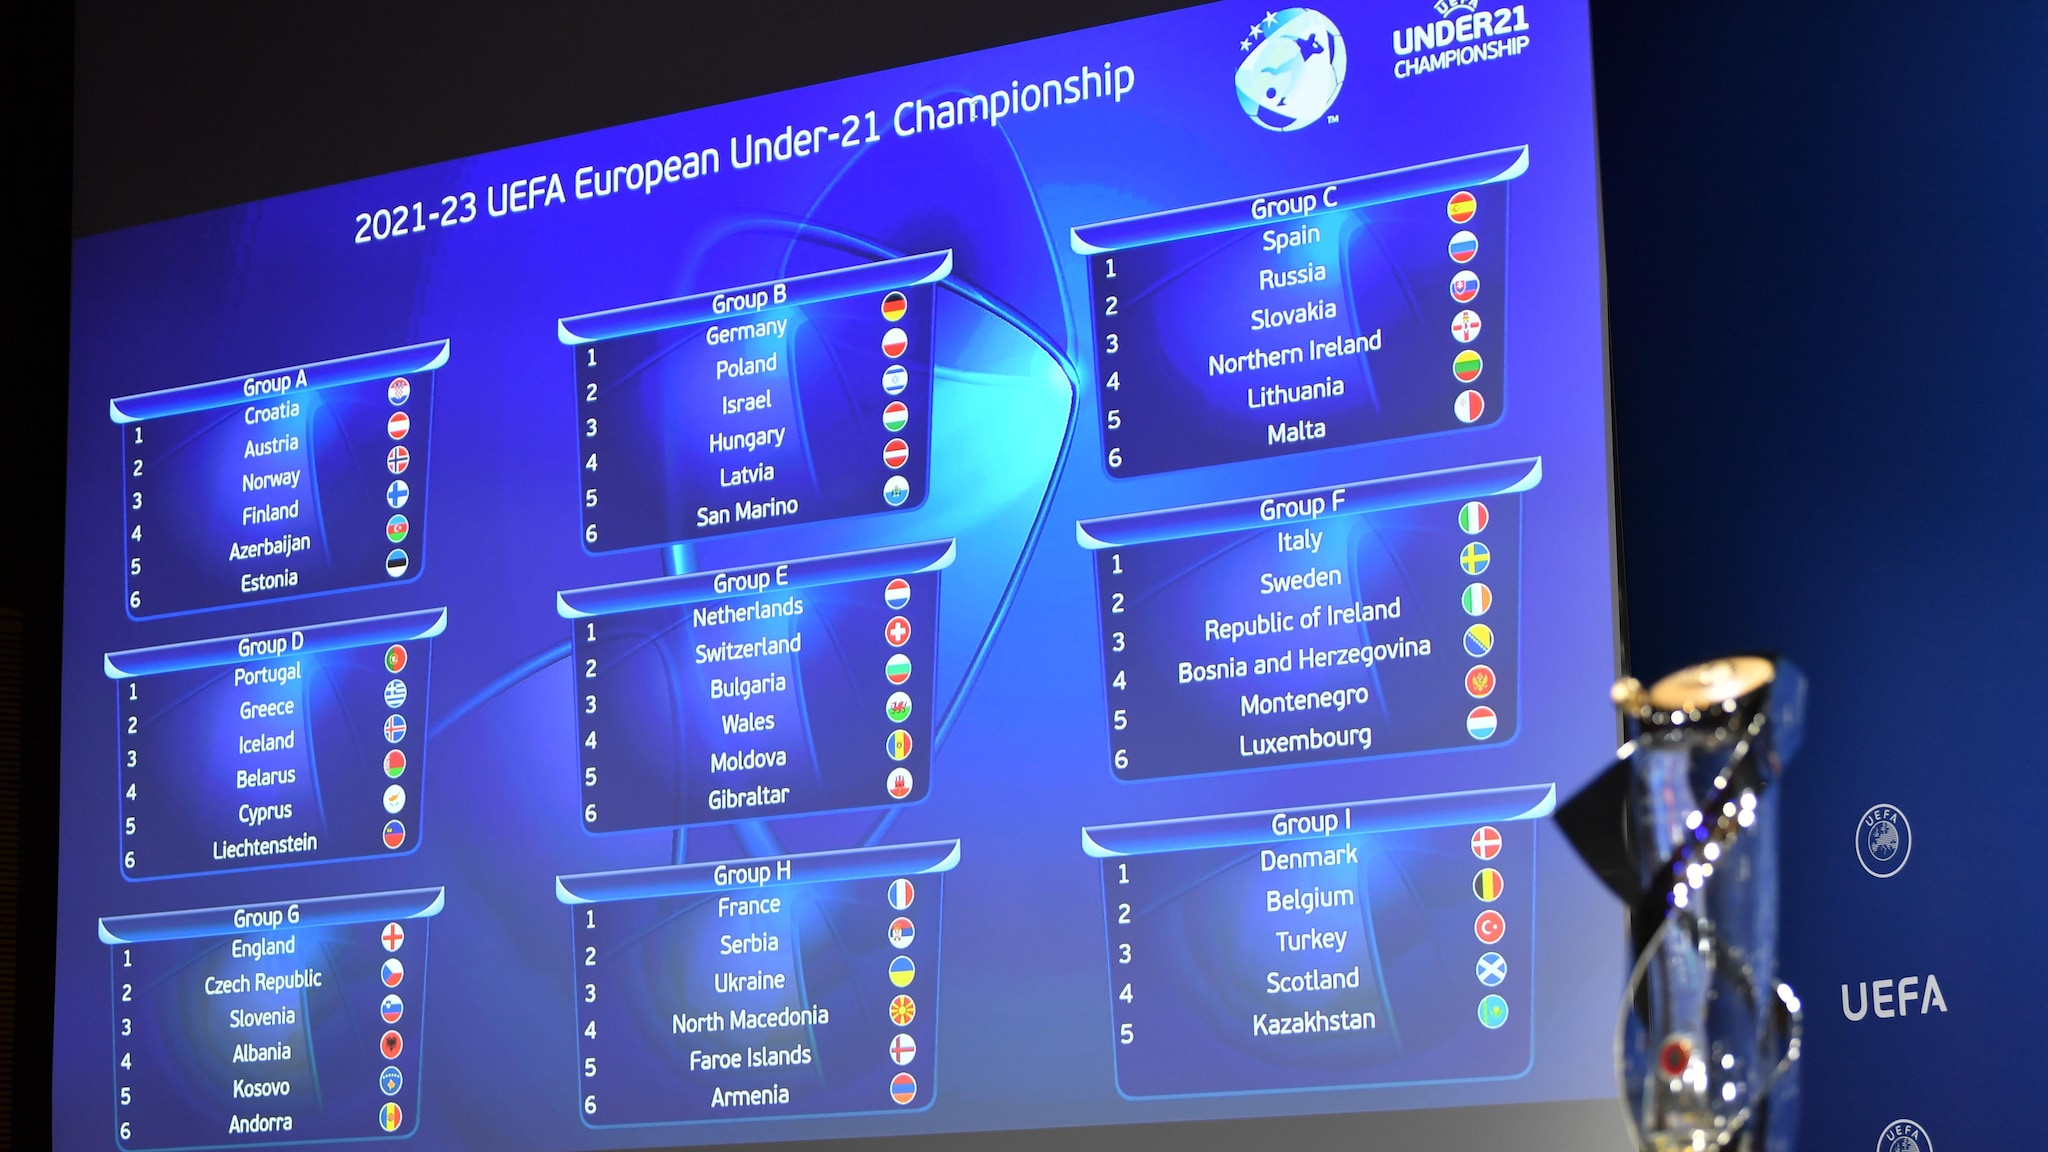 Sorteggio Qualificazioni Europee U21 UEFA 2021-23 |  Di età inferiore ai 21 anni